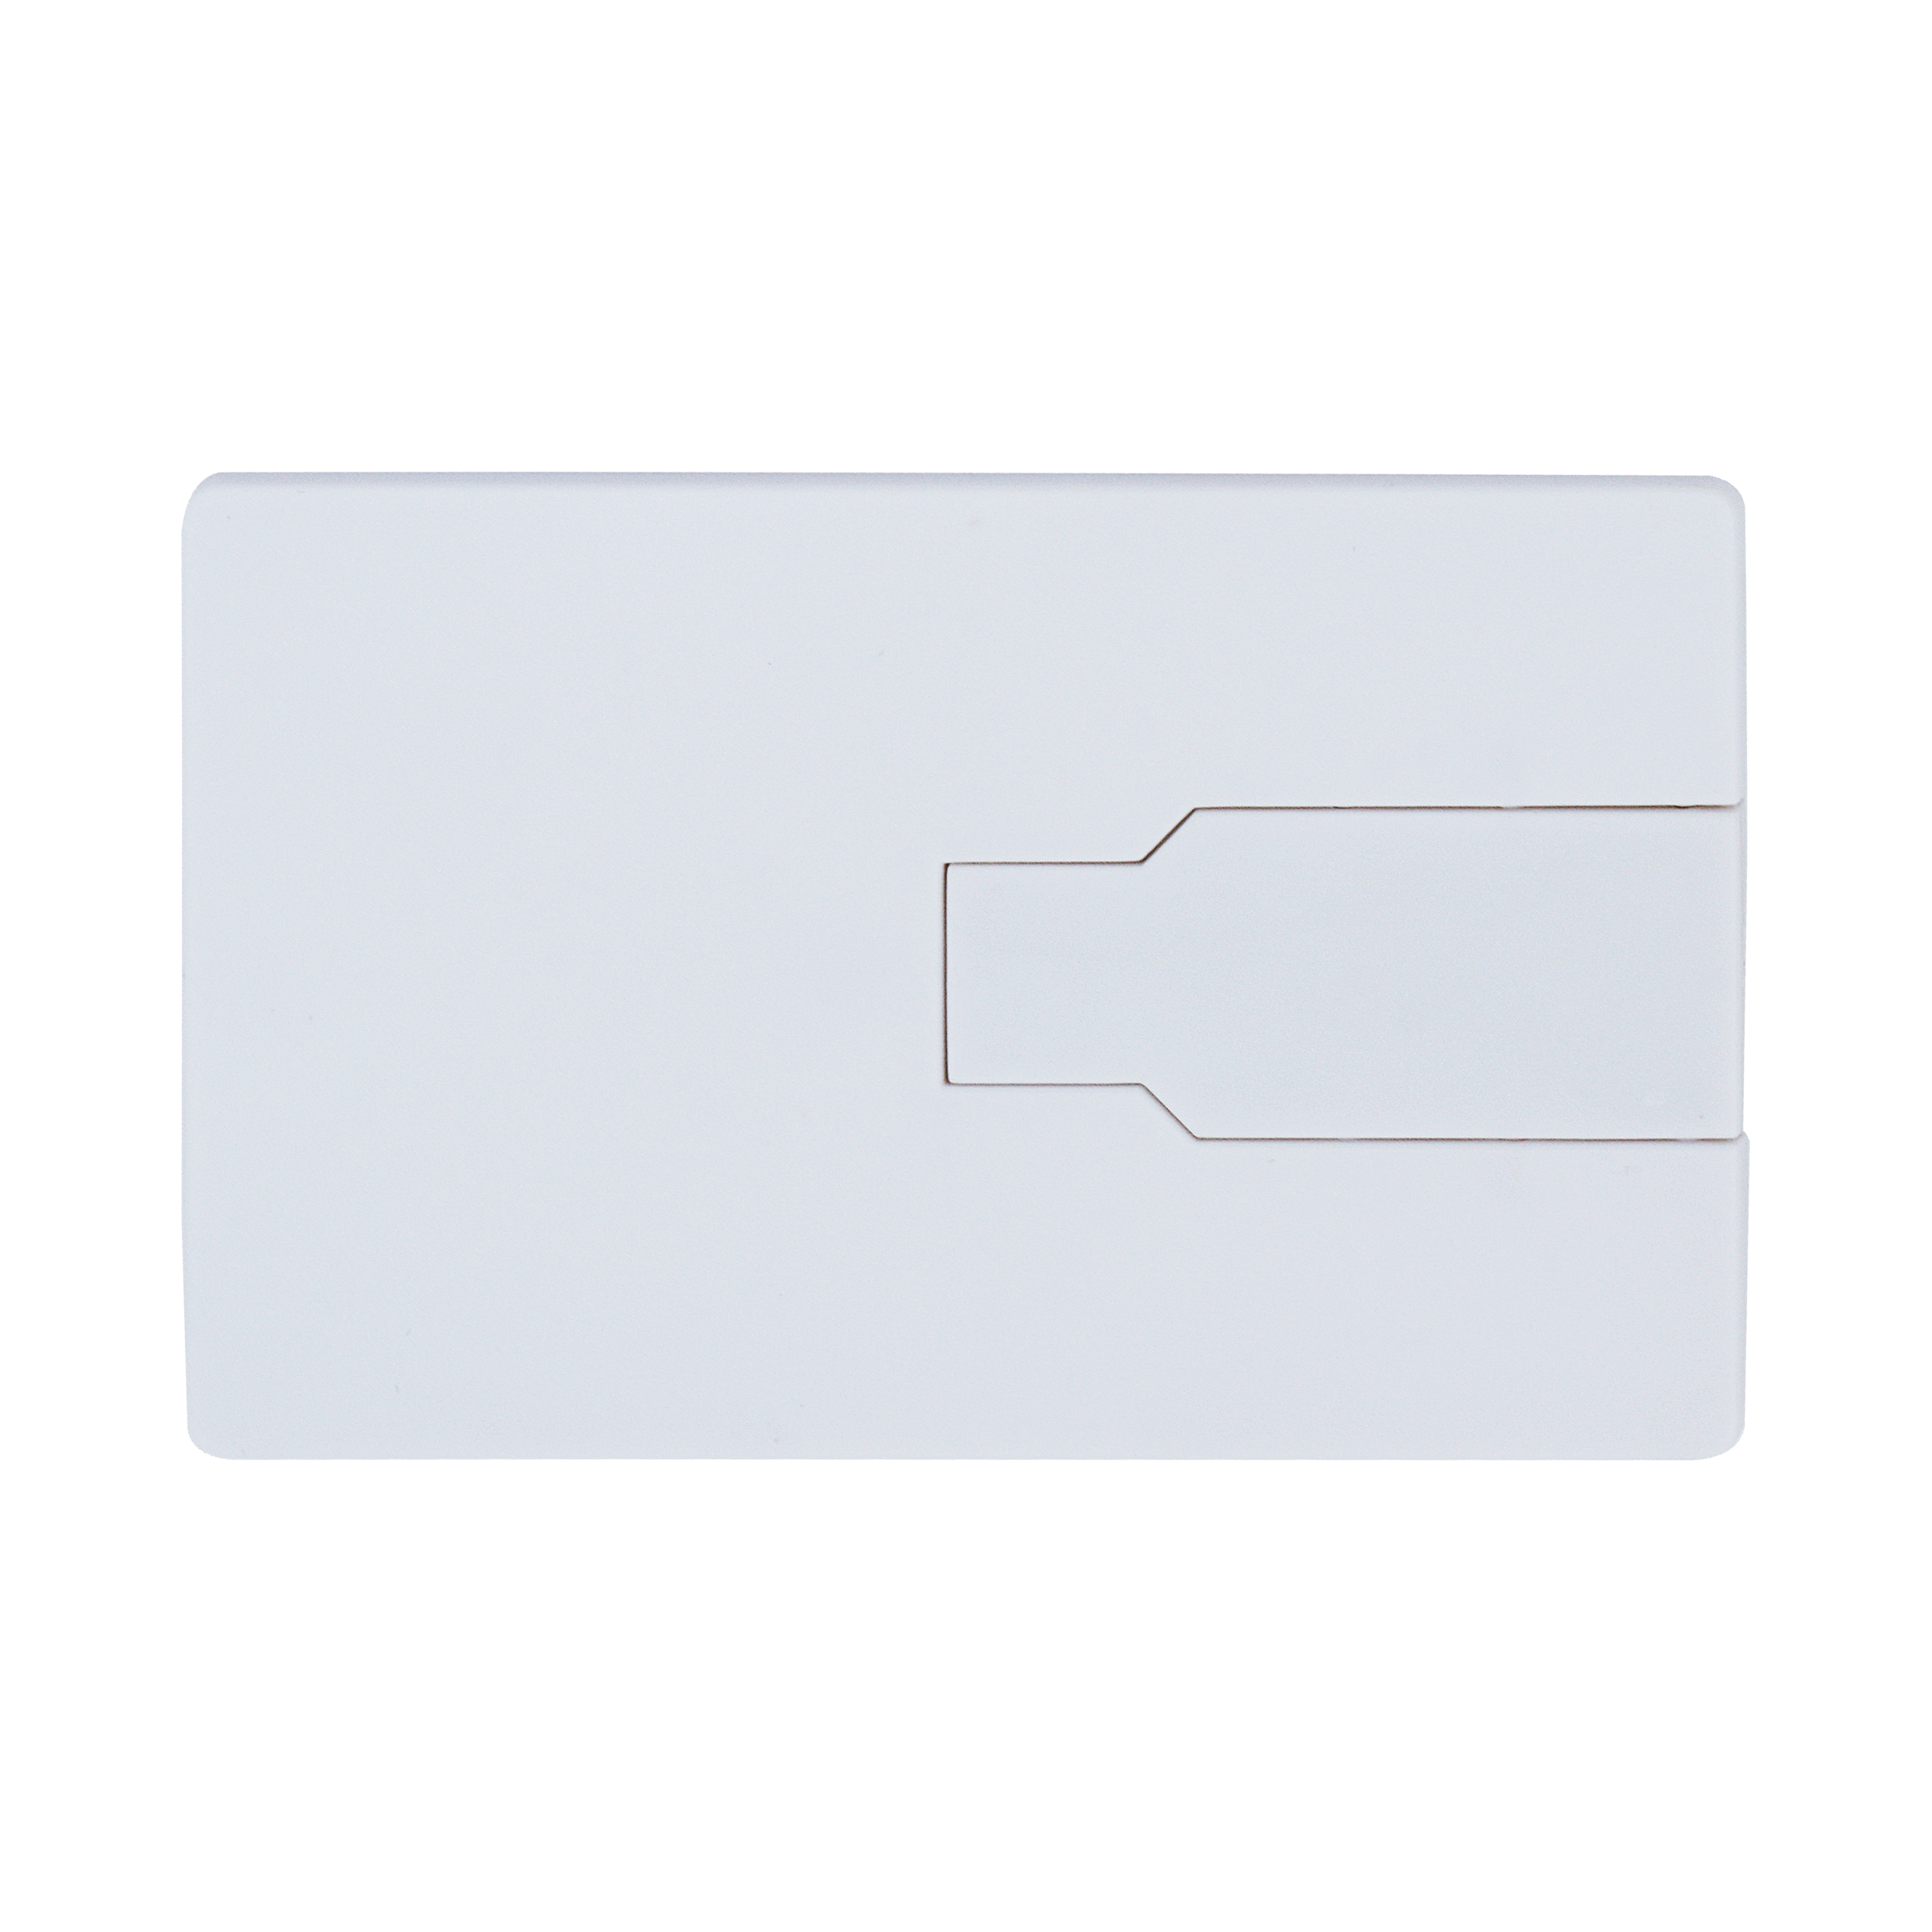 Plano Credit Card USB  - Volume